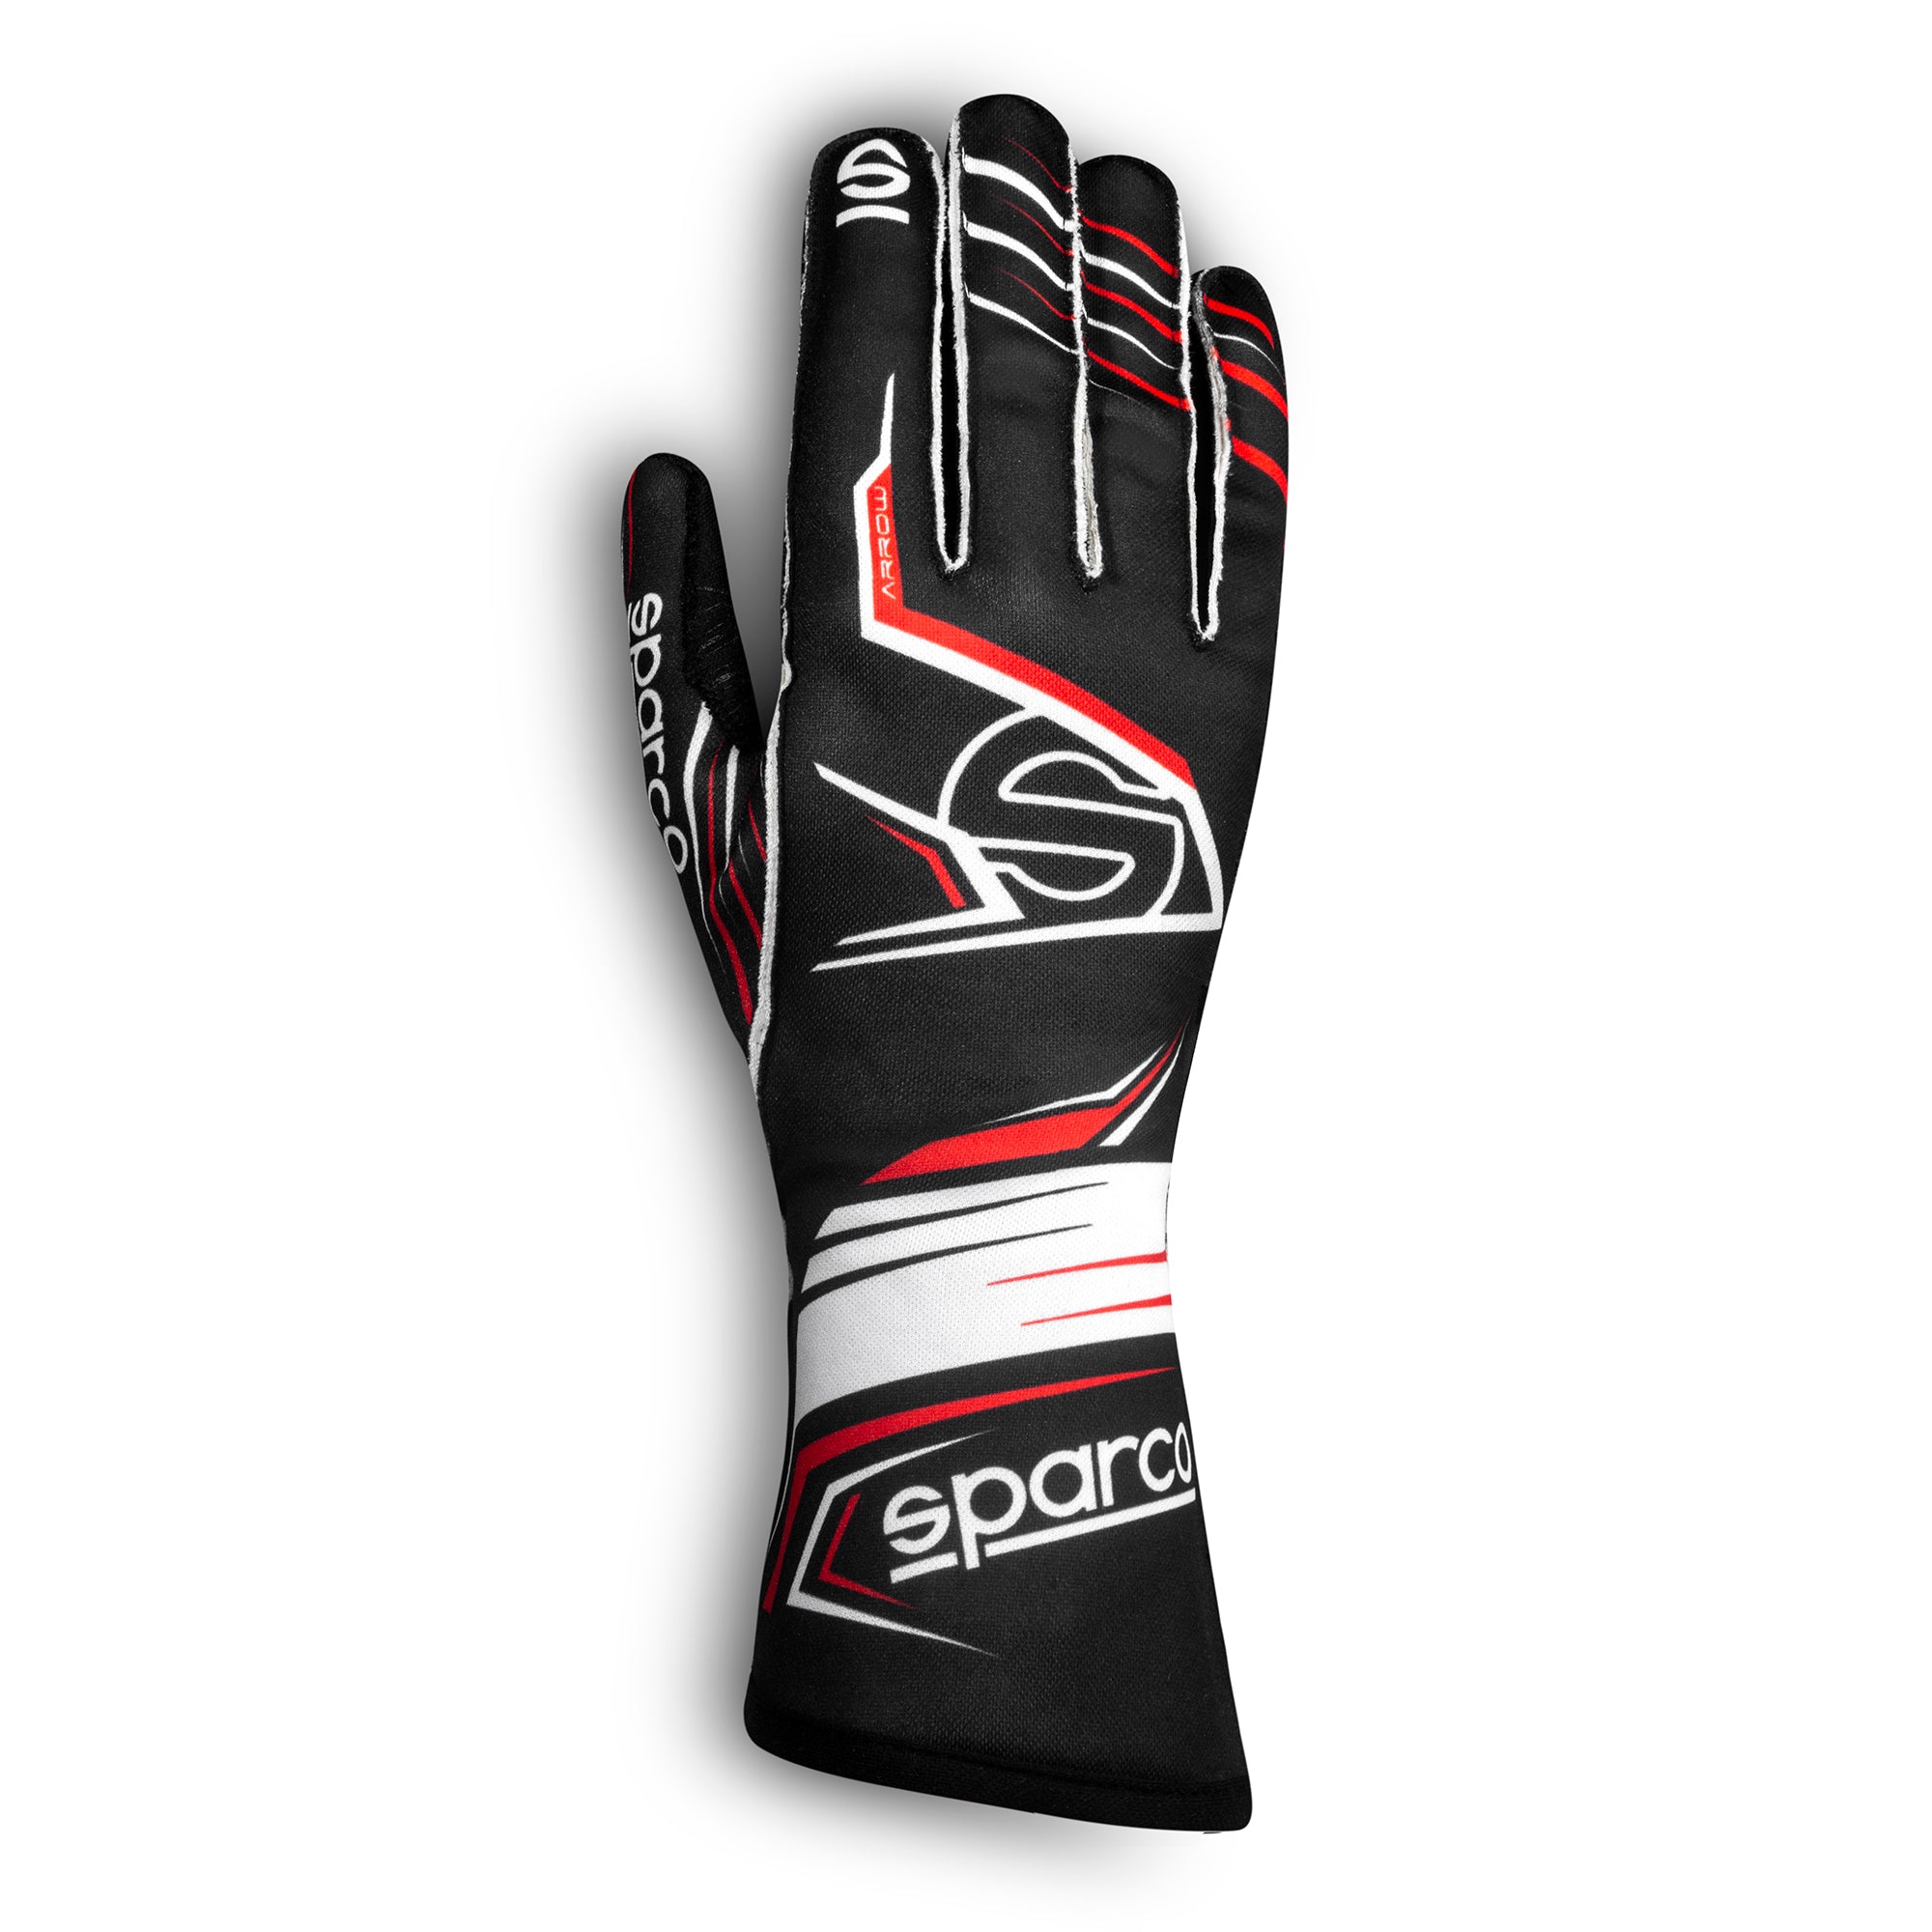 Sparco Arrow K guantes para piloto karting blanco/rojo